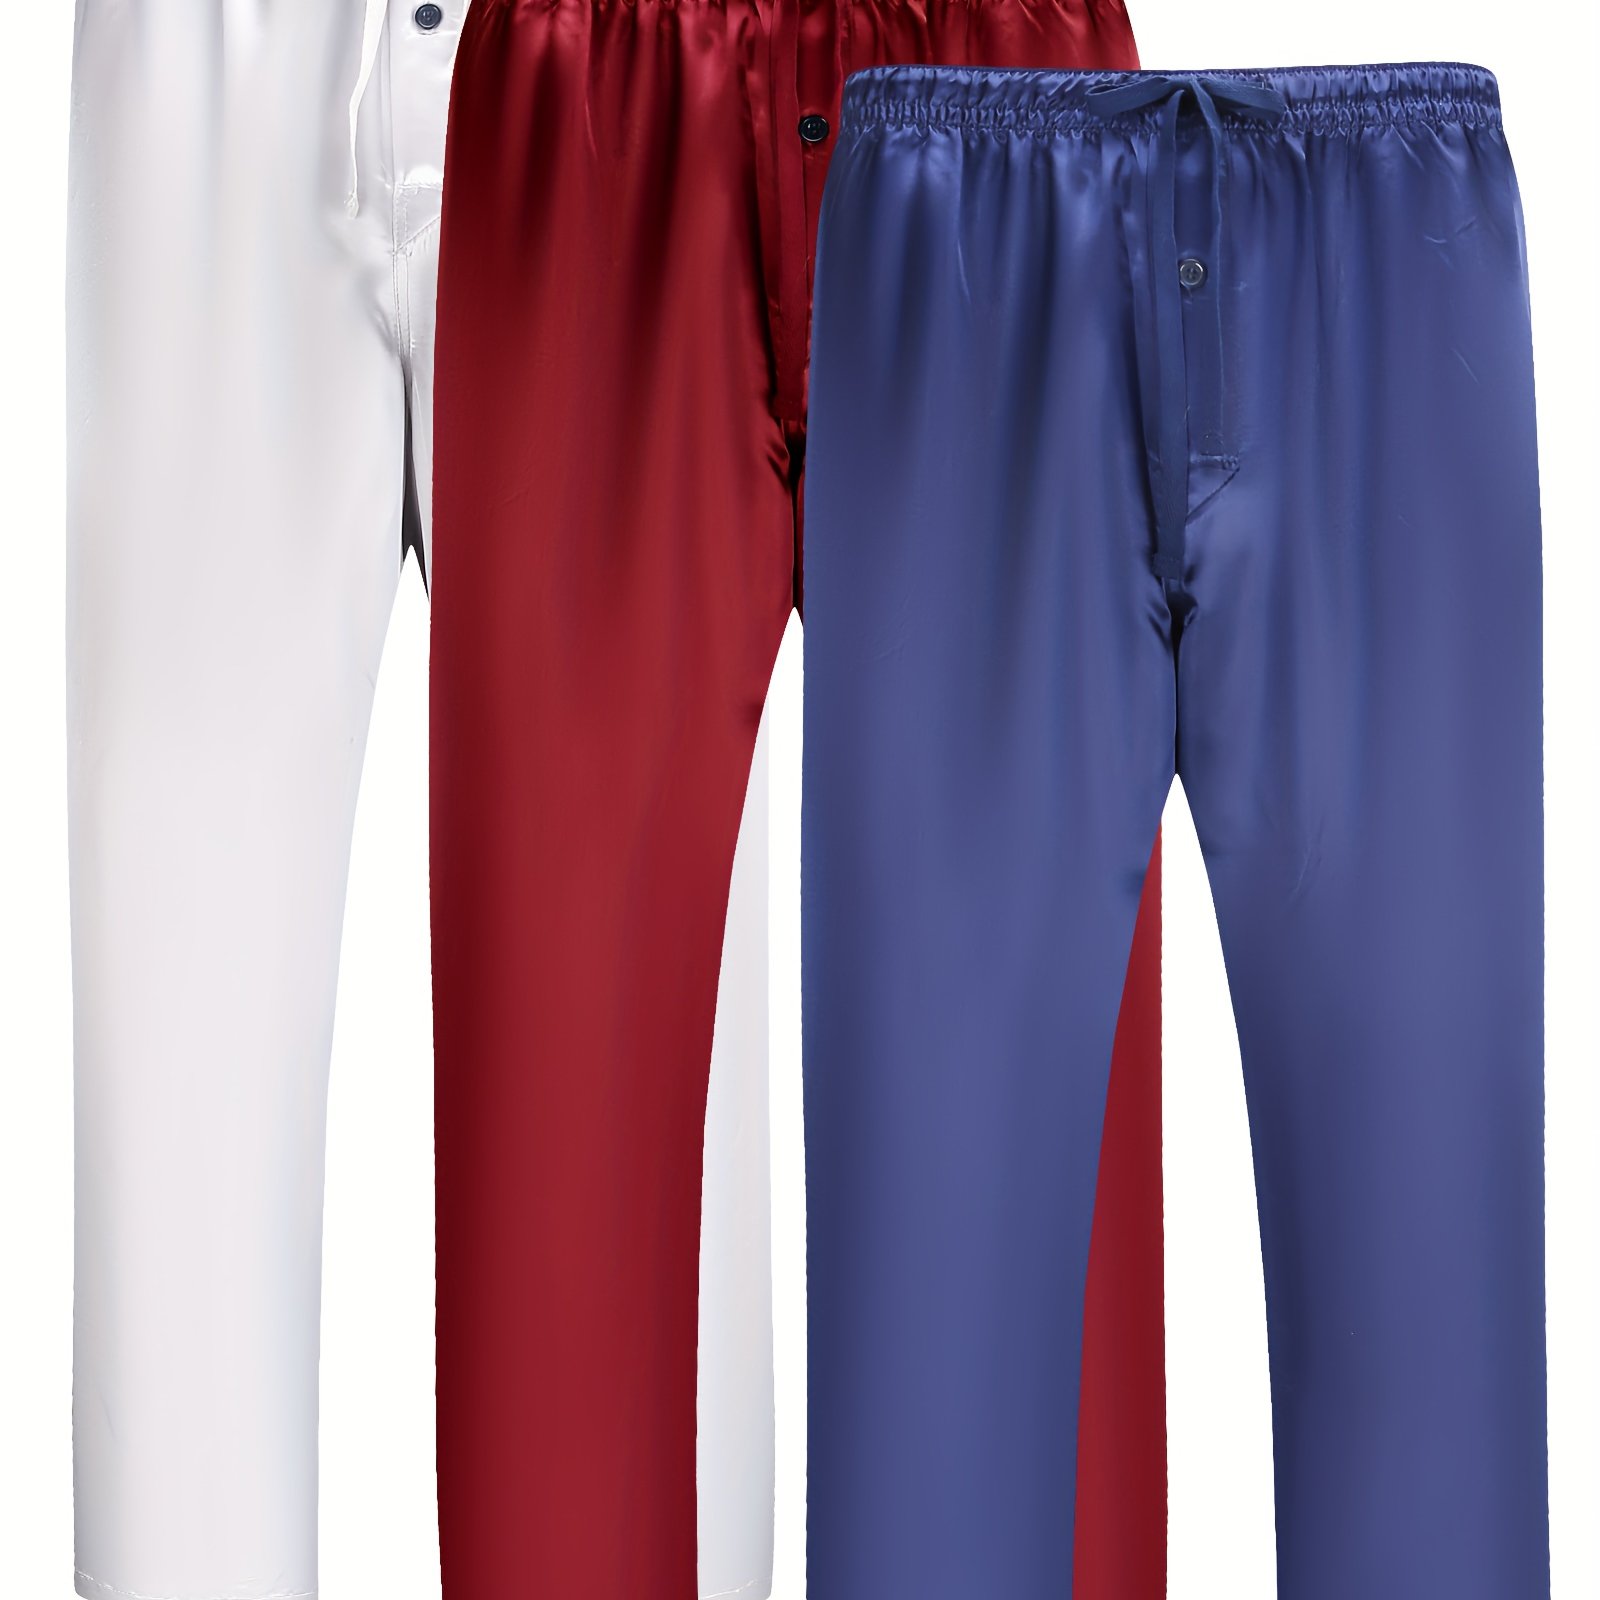 Men's Silk Satin Pajama Pants Soft Long Sleep Bottoms Pj Lounge Pant with  Pockets (S-3XL)